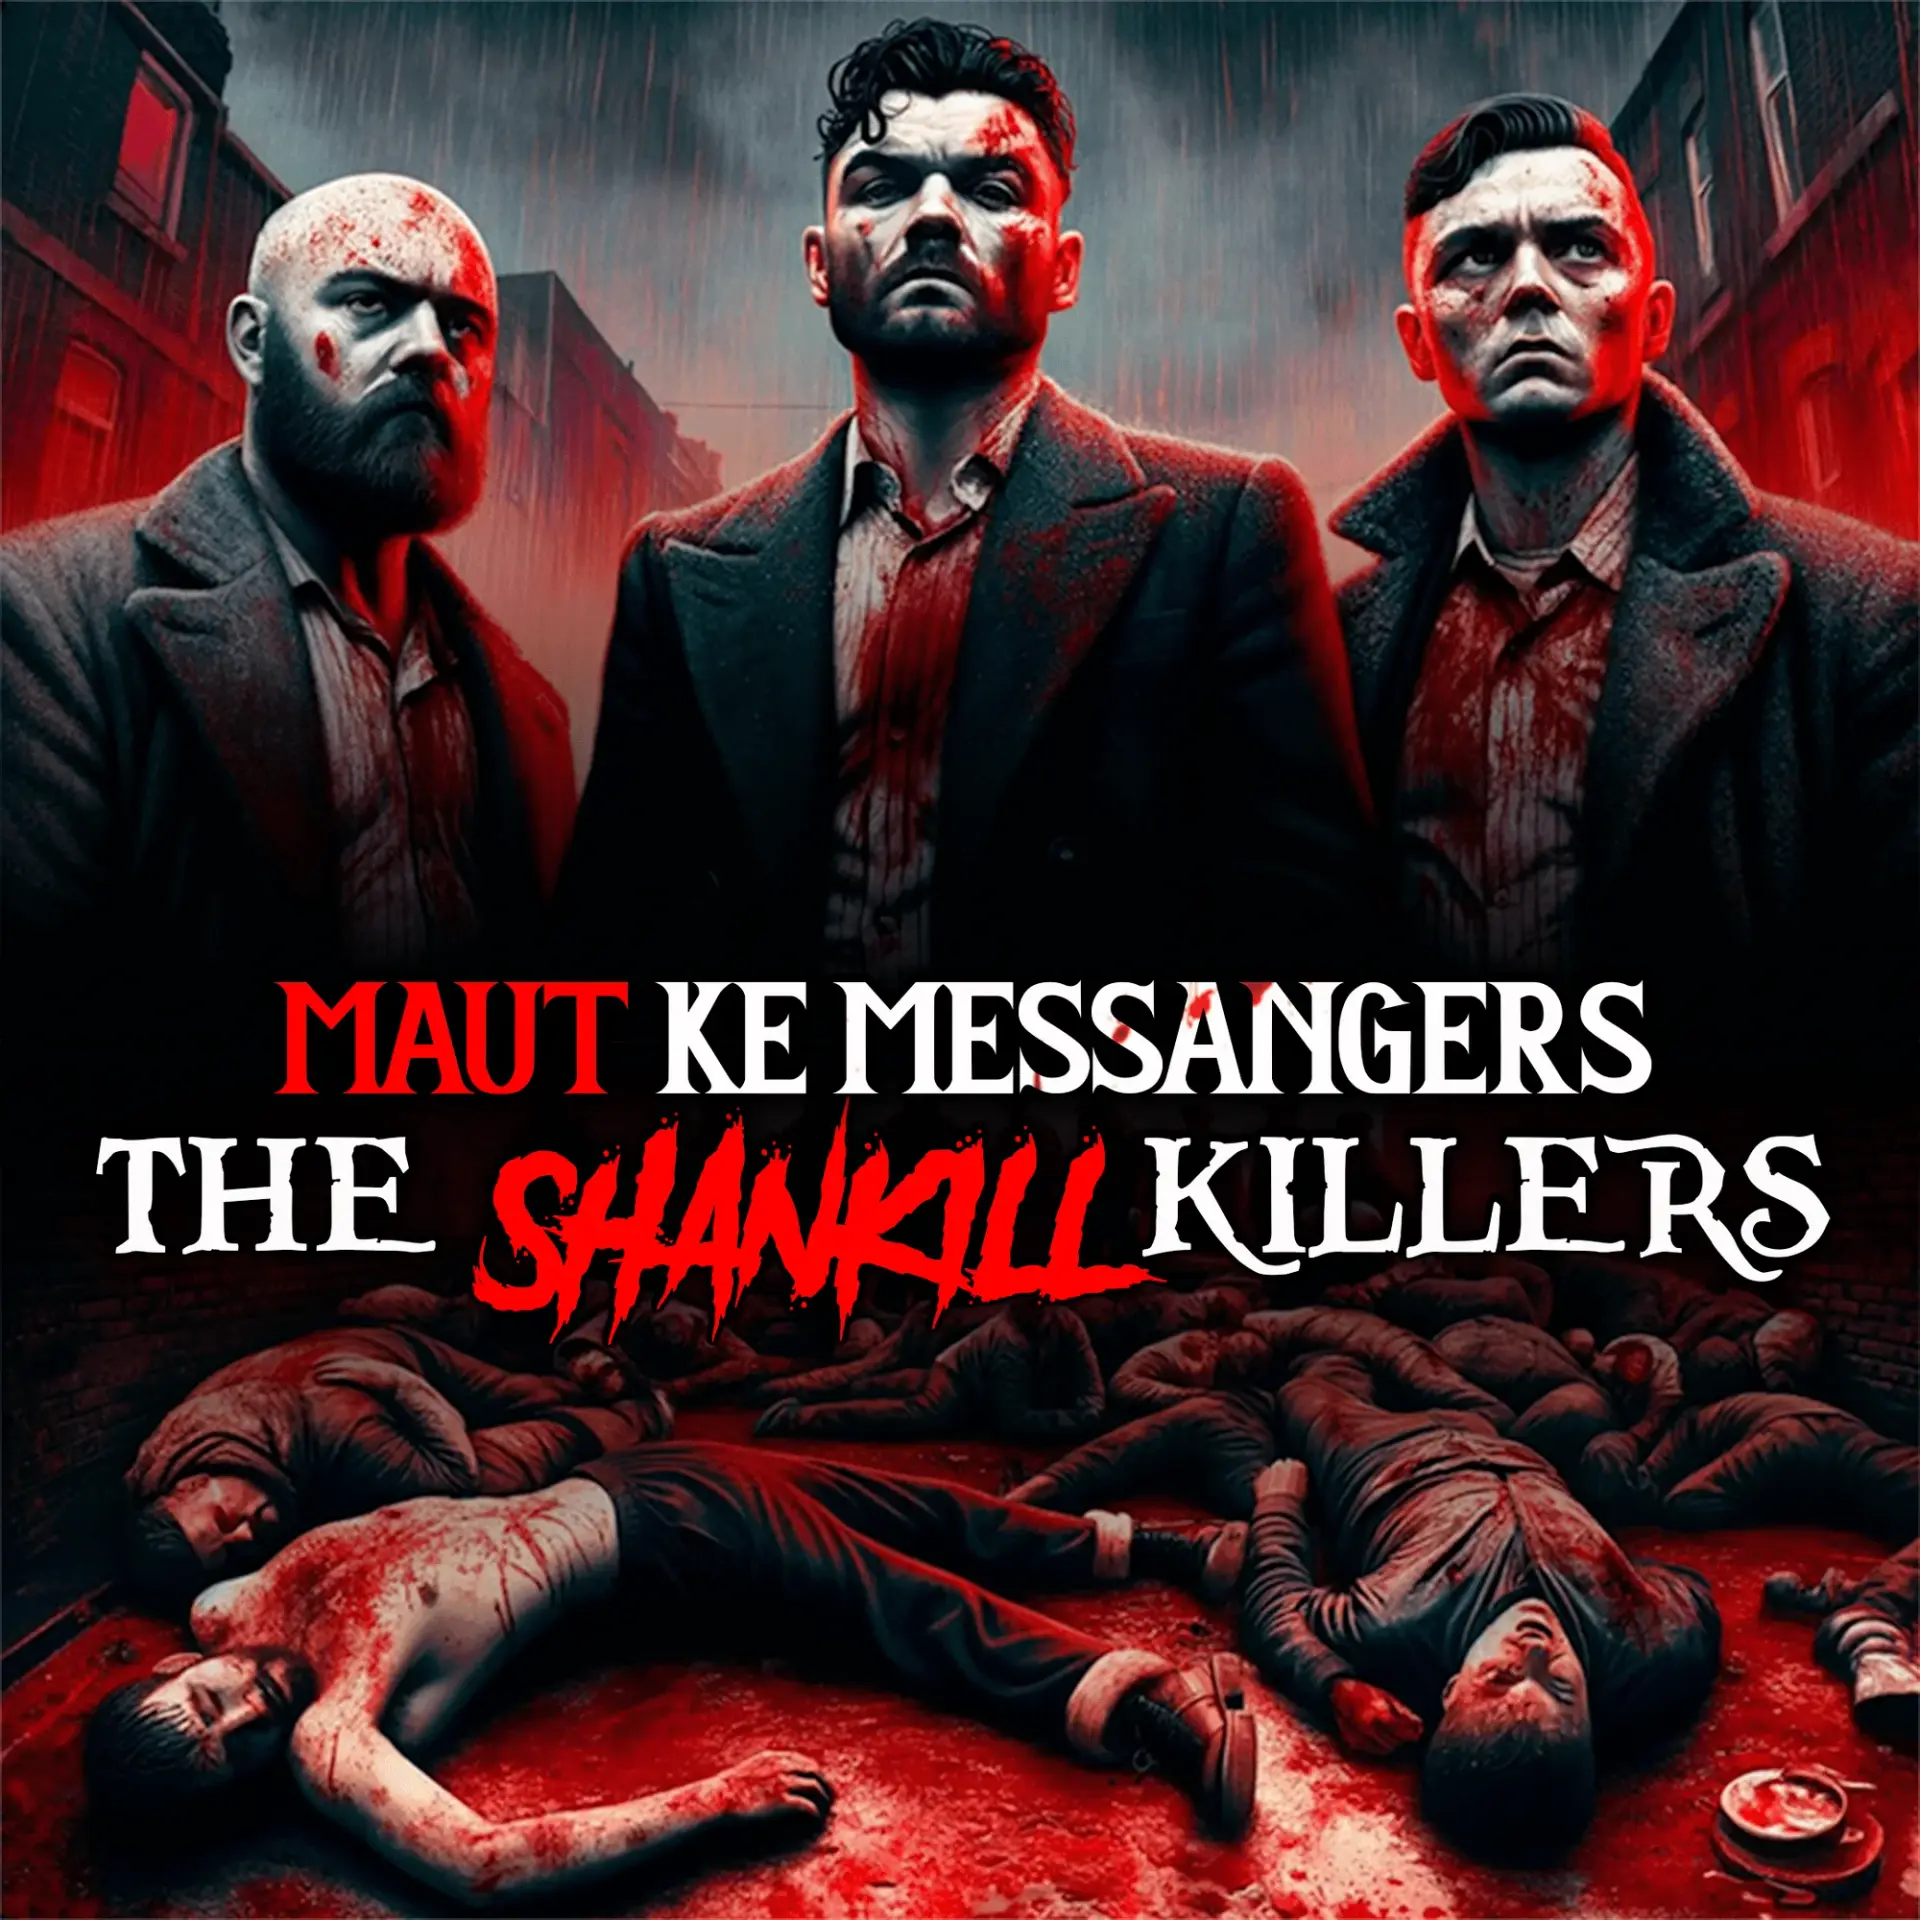 Maut ke messangers -The shankill killers | 